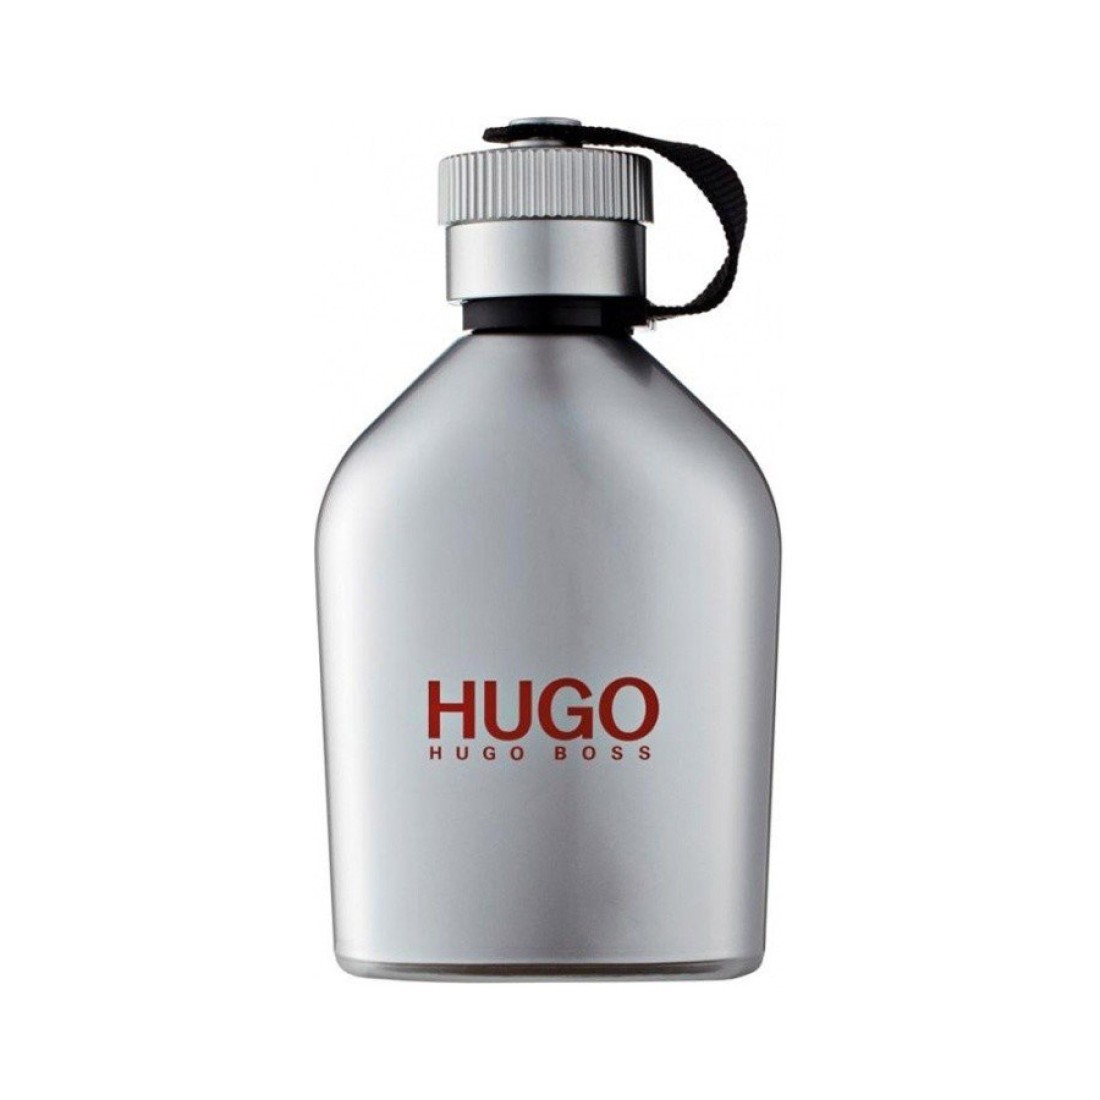 Hugo купить спб. Hugo Hugo Boss 125. Hugo Boss Iced 75. Духи Хьюго босс грей.